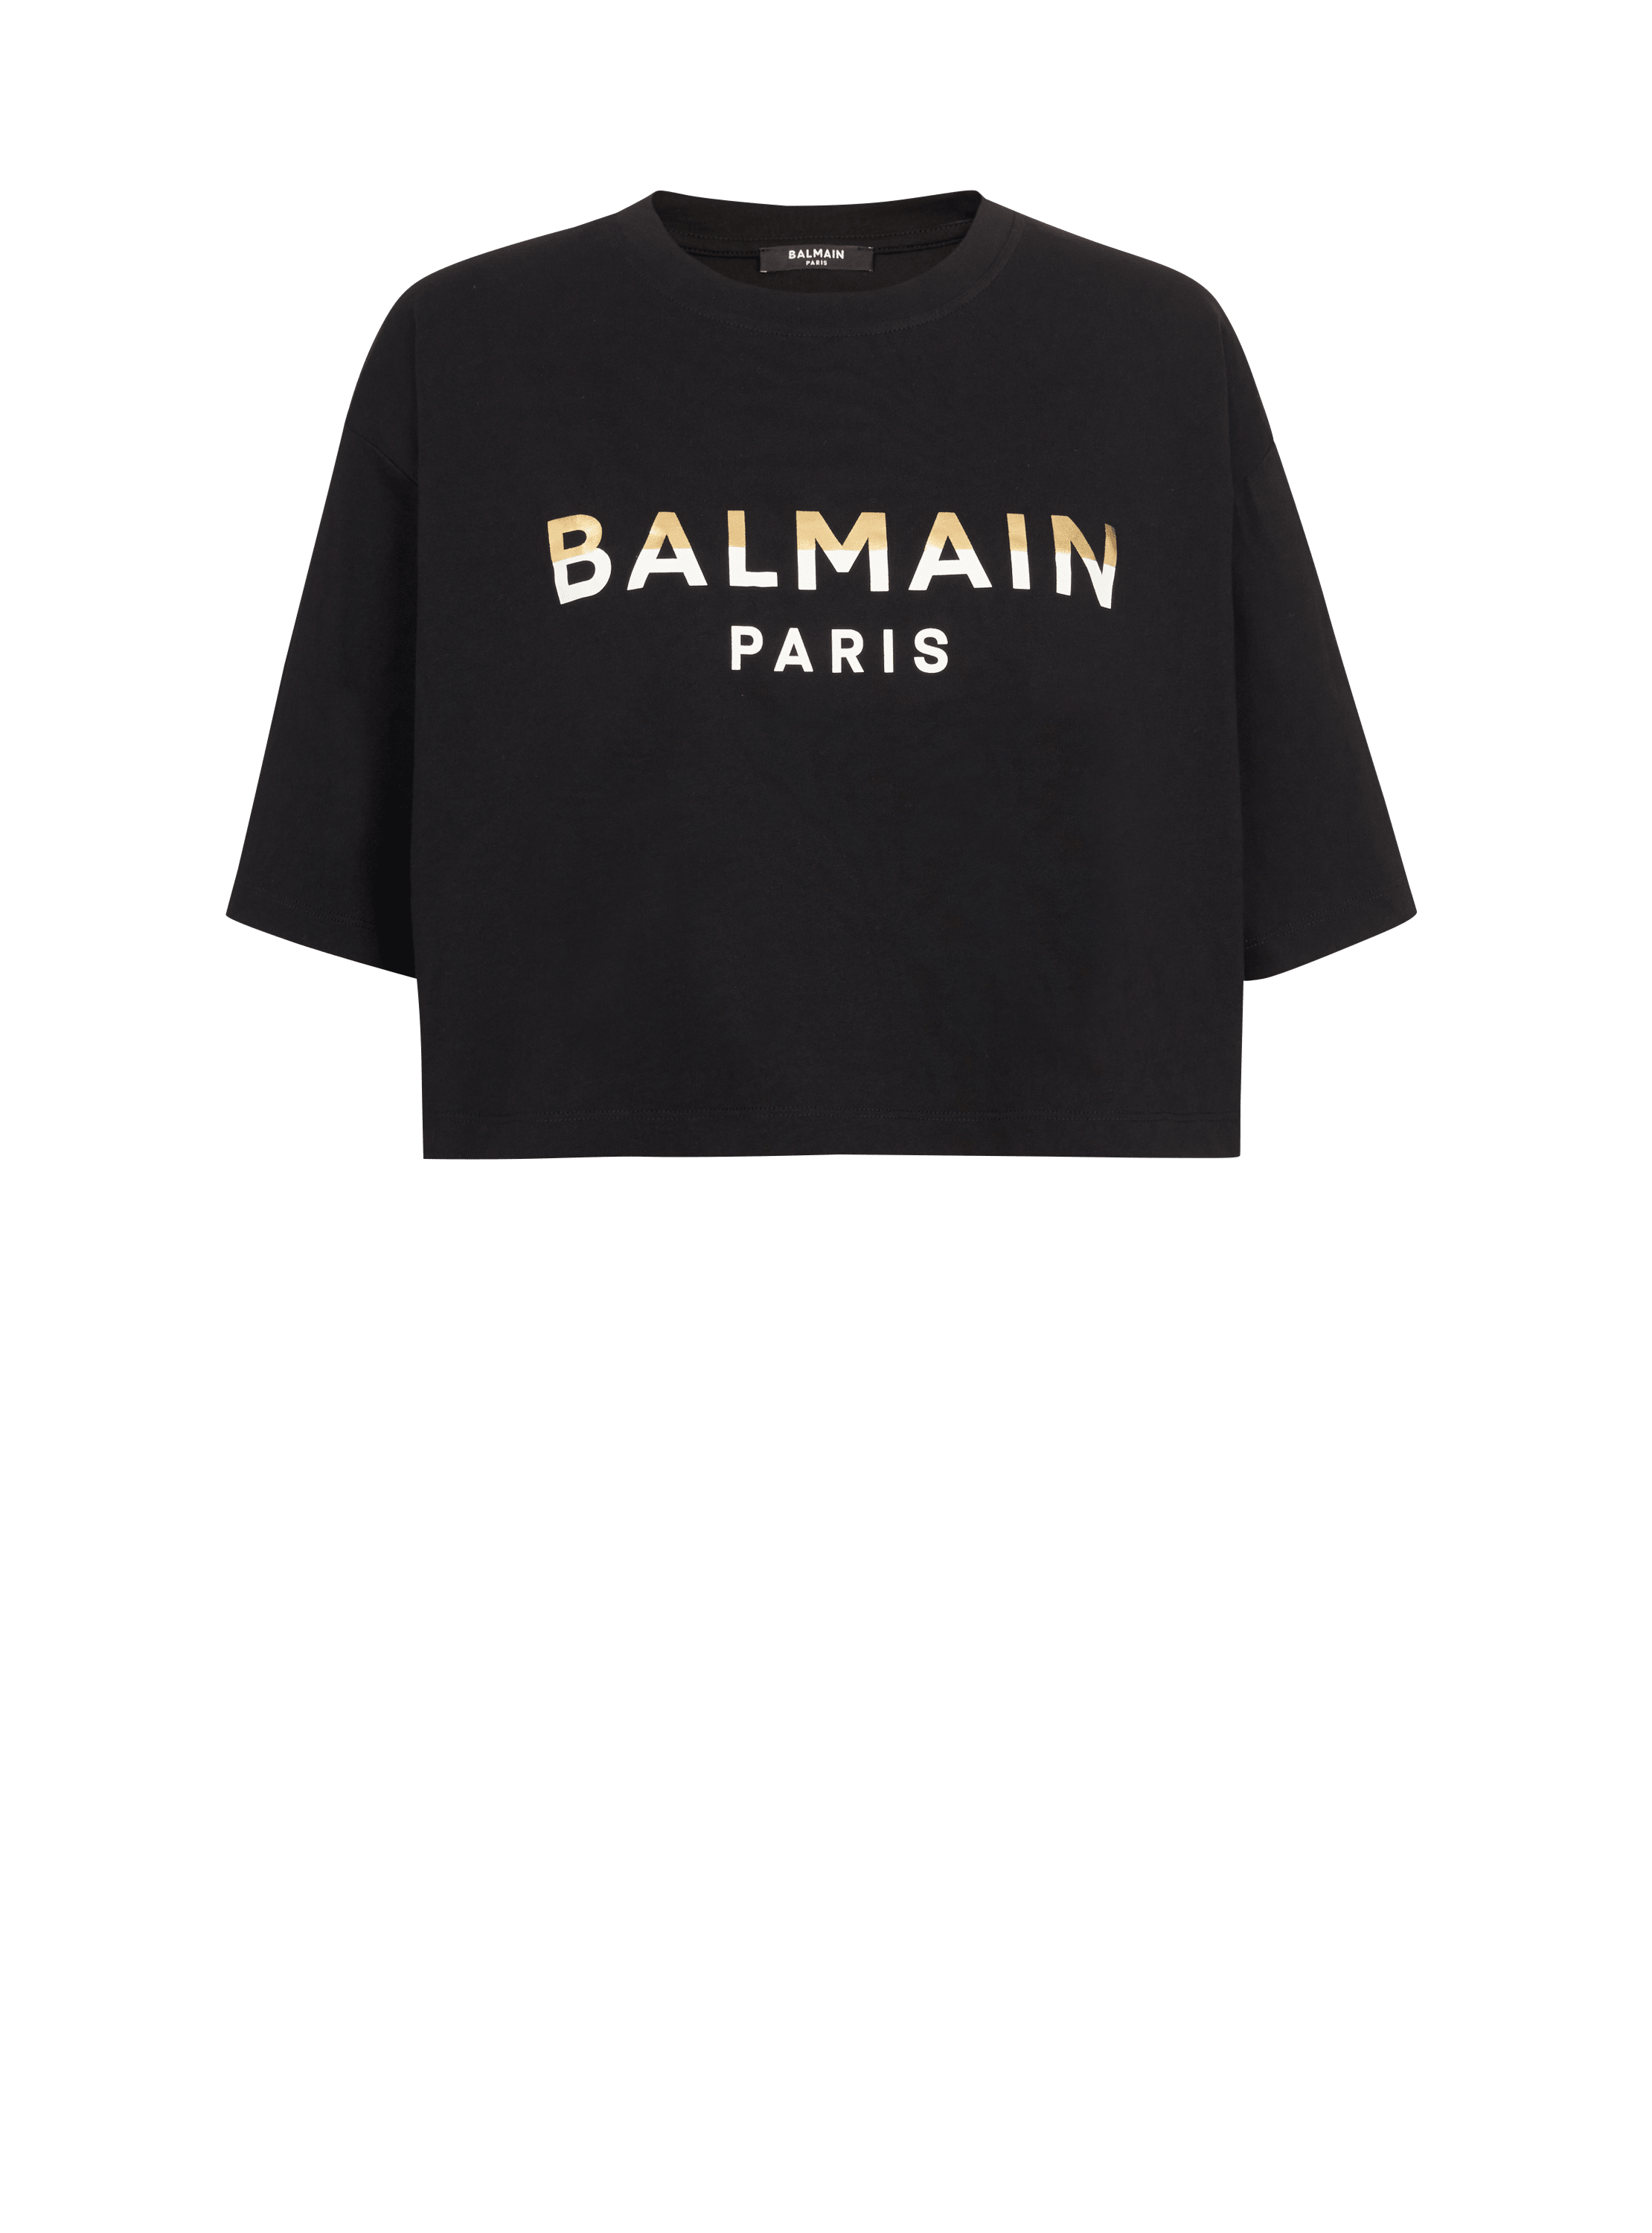 Cropped Balmain Paris T-shirt